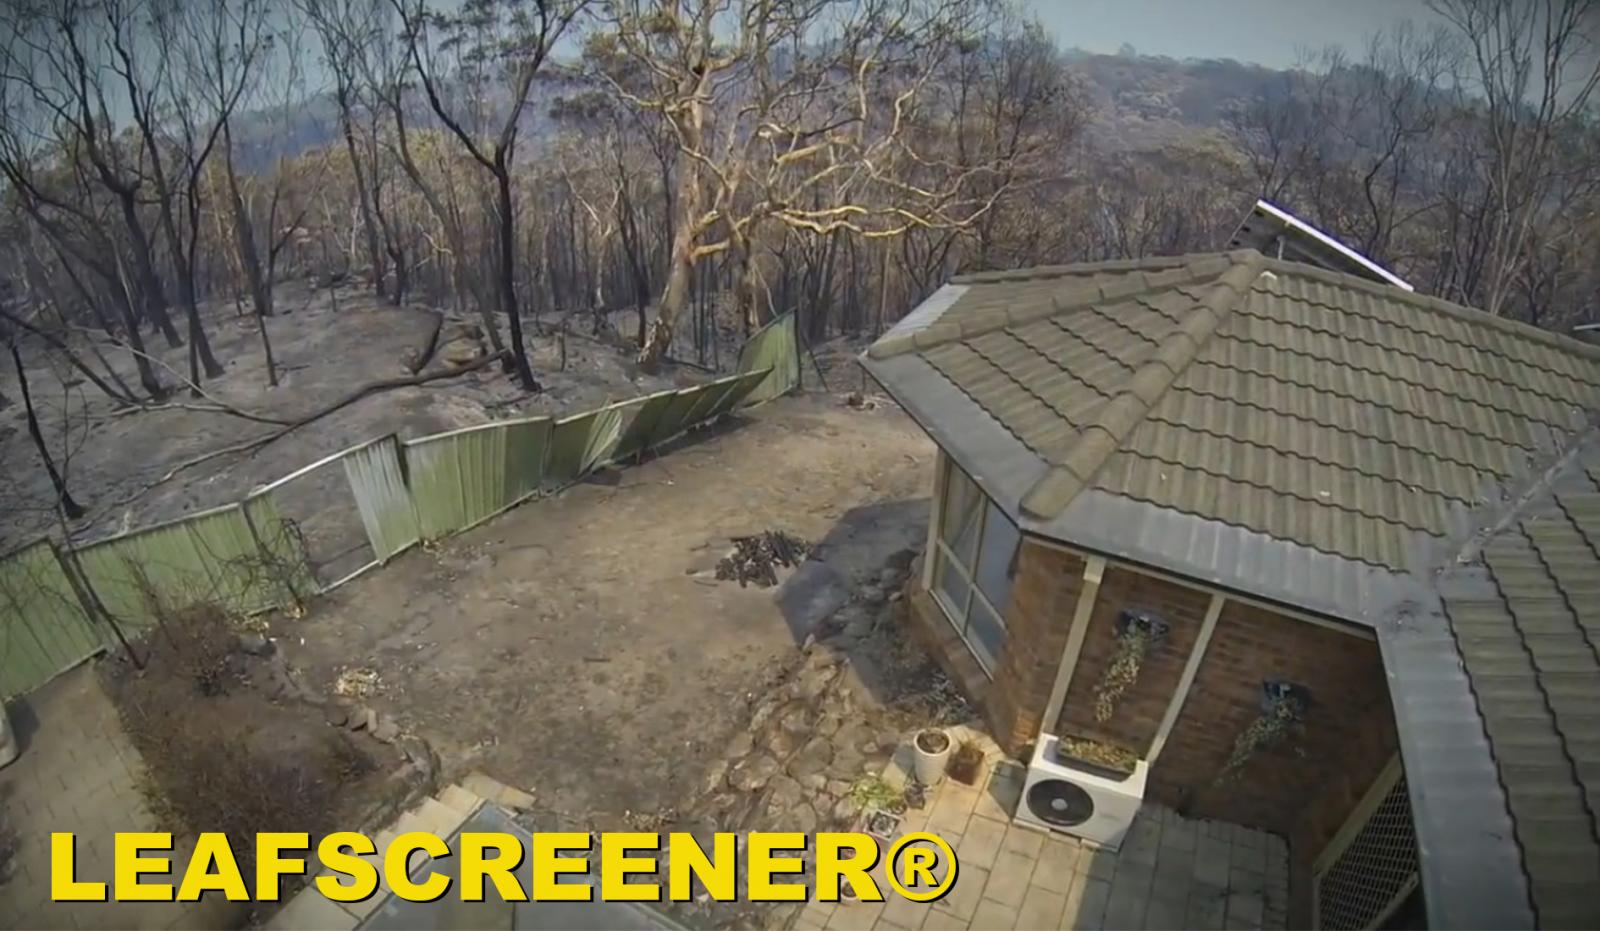 LEAFSCREENER on a house that survived a devastating bushfire